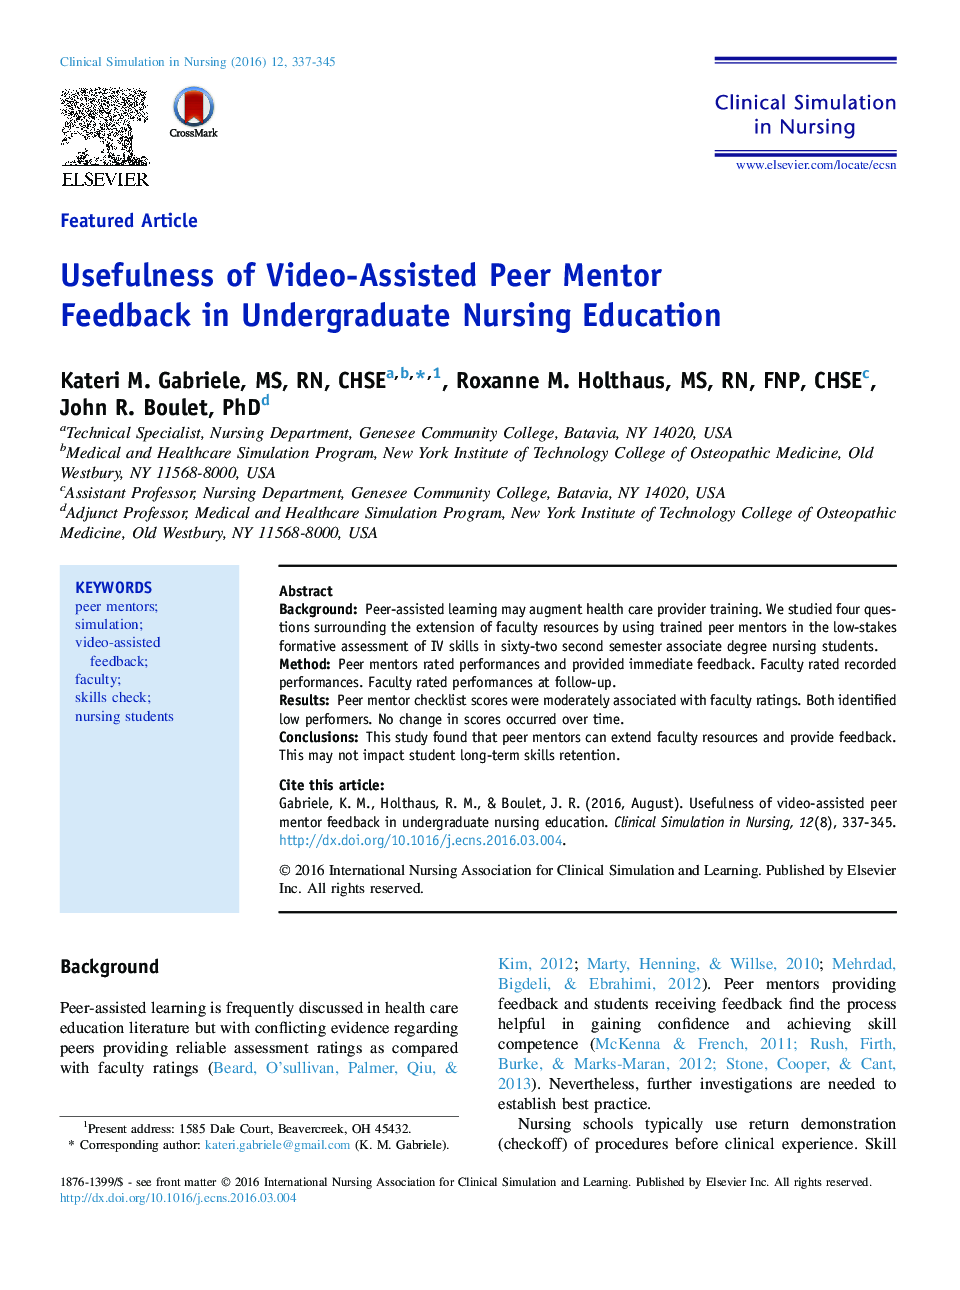 Usefulness of Video-Assisted Peer Mentor Feedback in Undergraduate Nursing Education